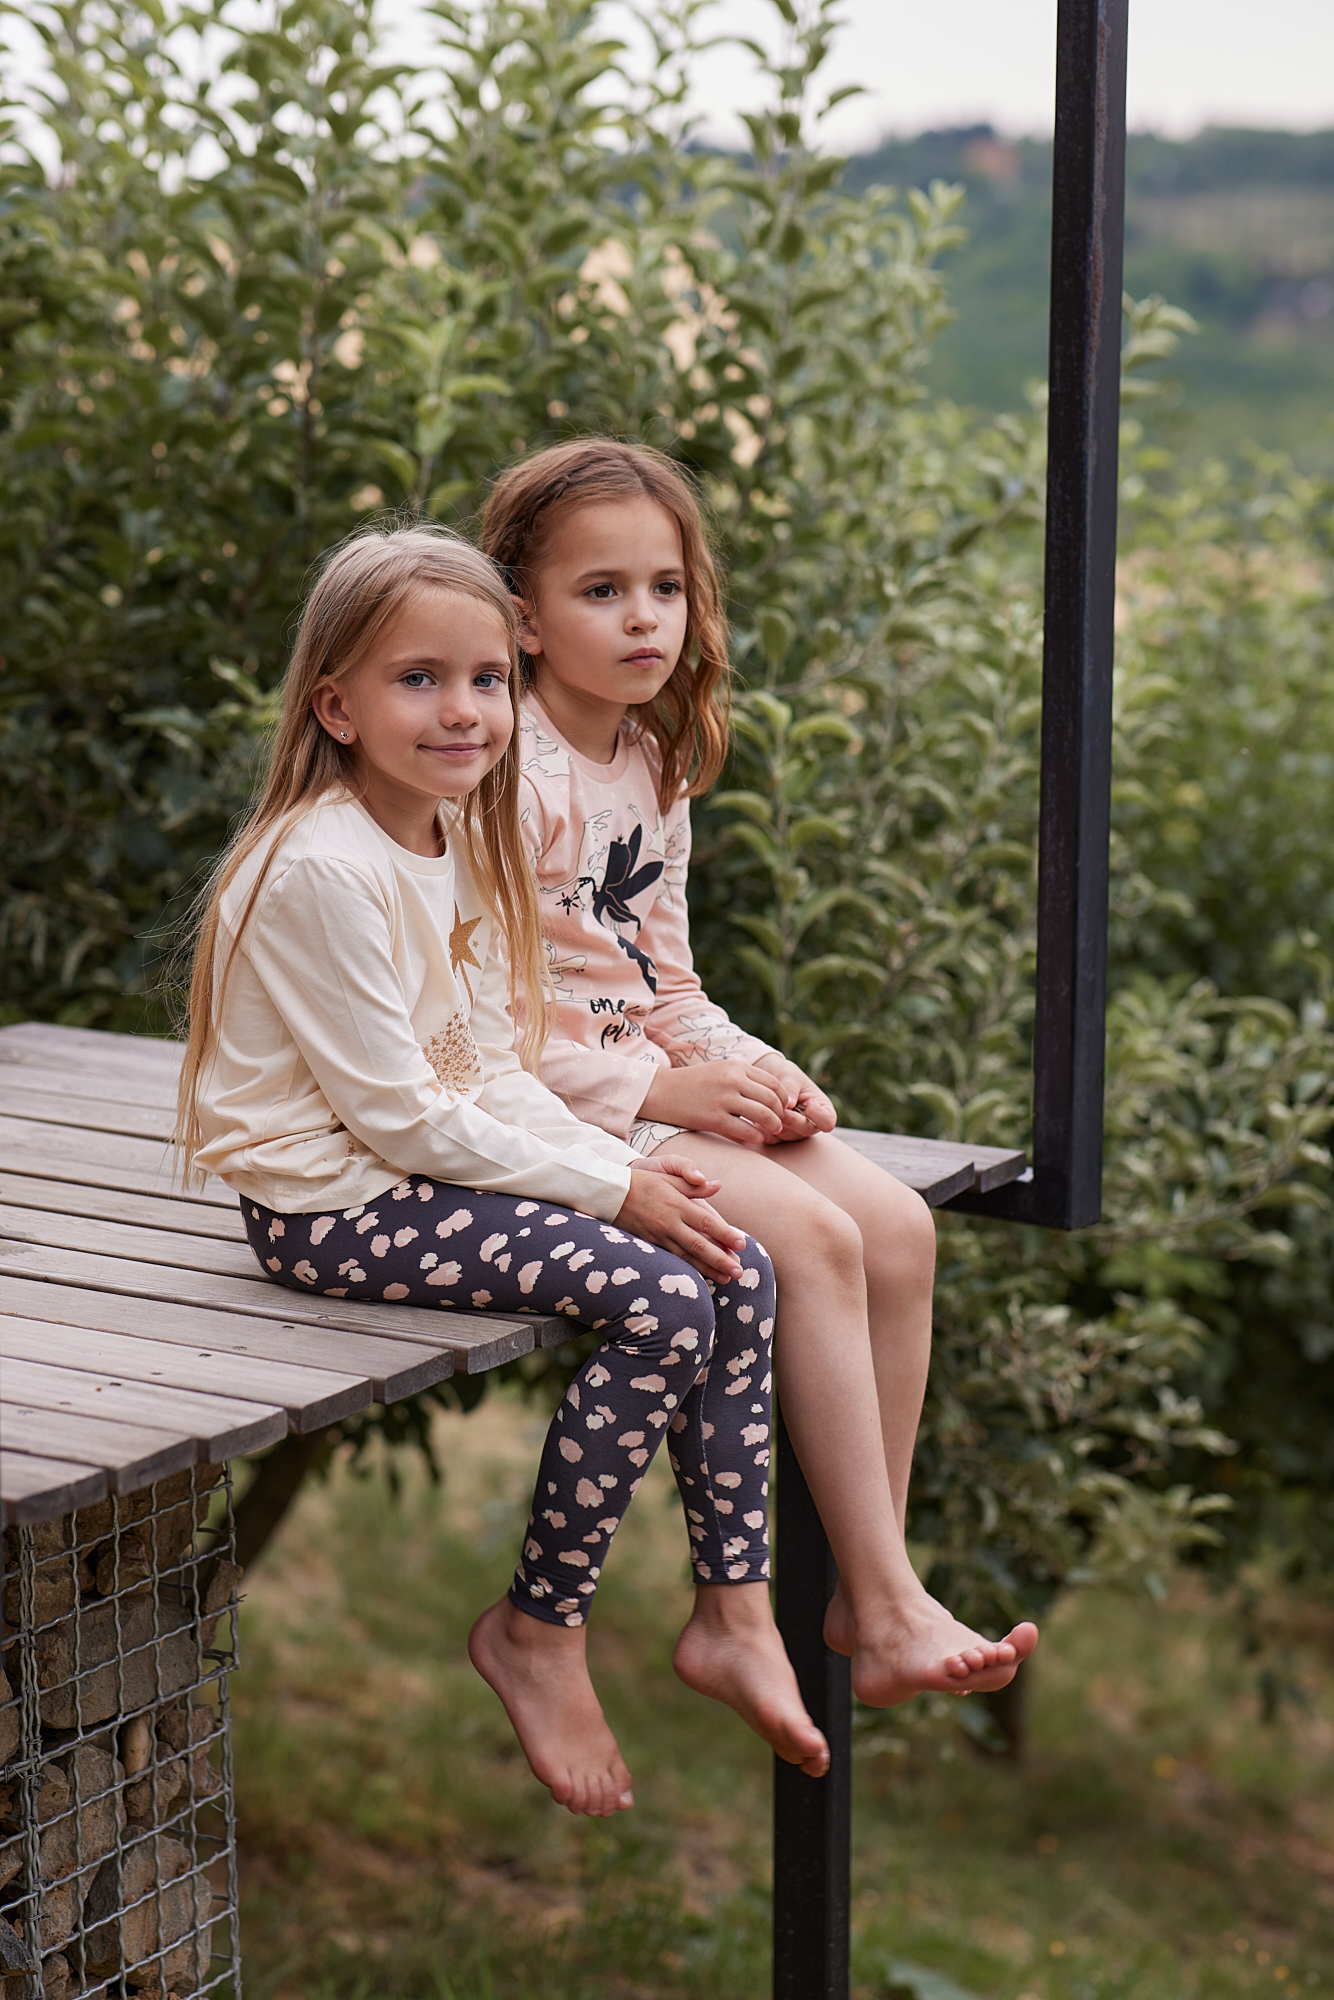 Dve devojčice u bež pidžamama sede na terasi